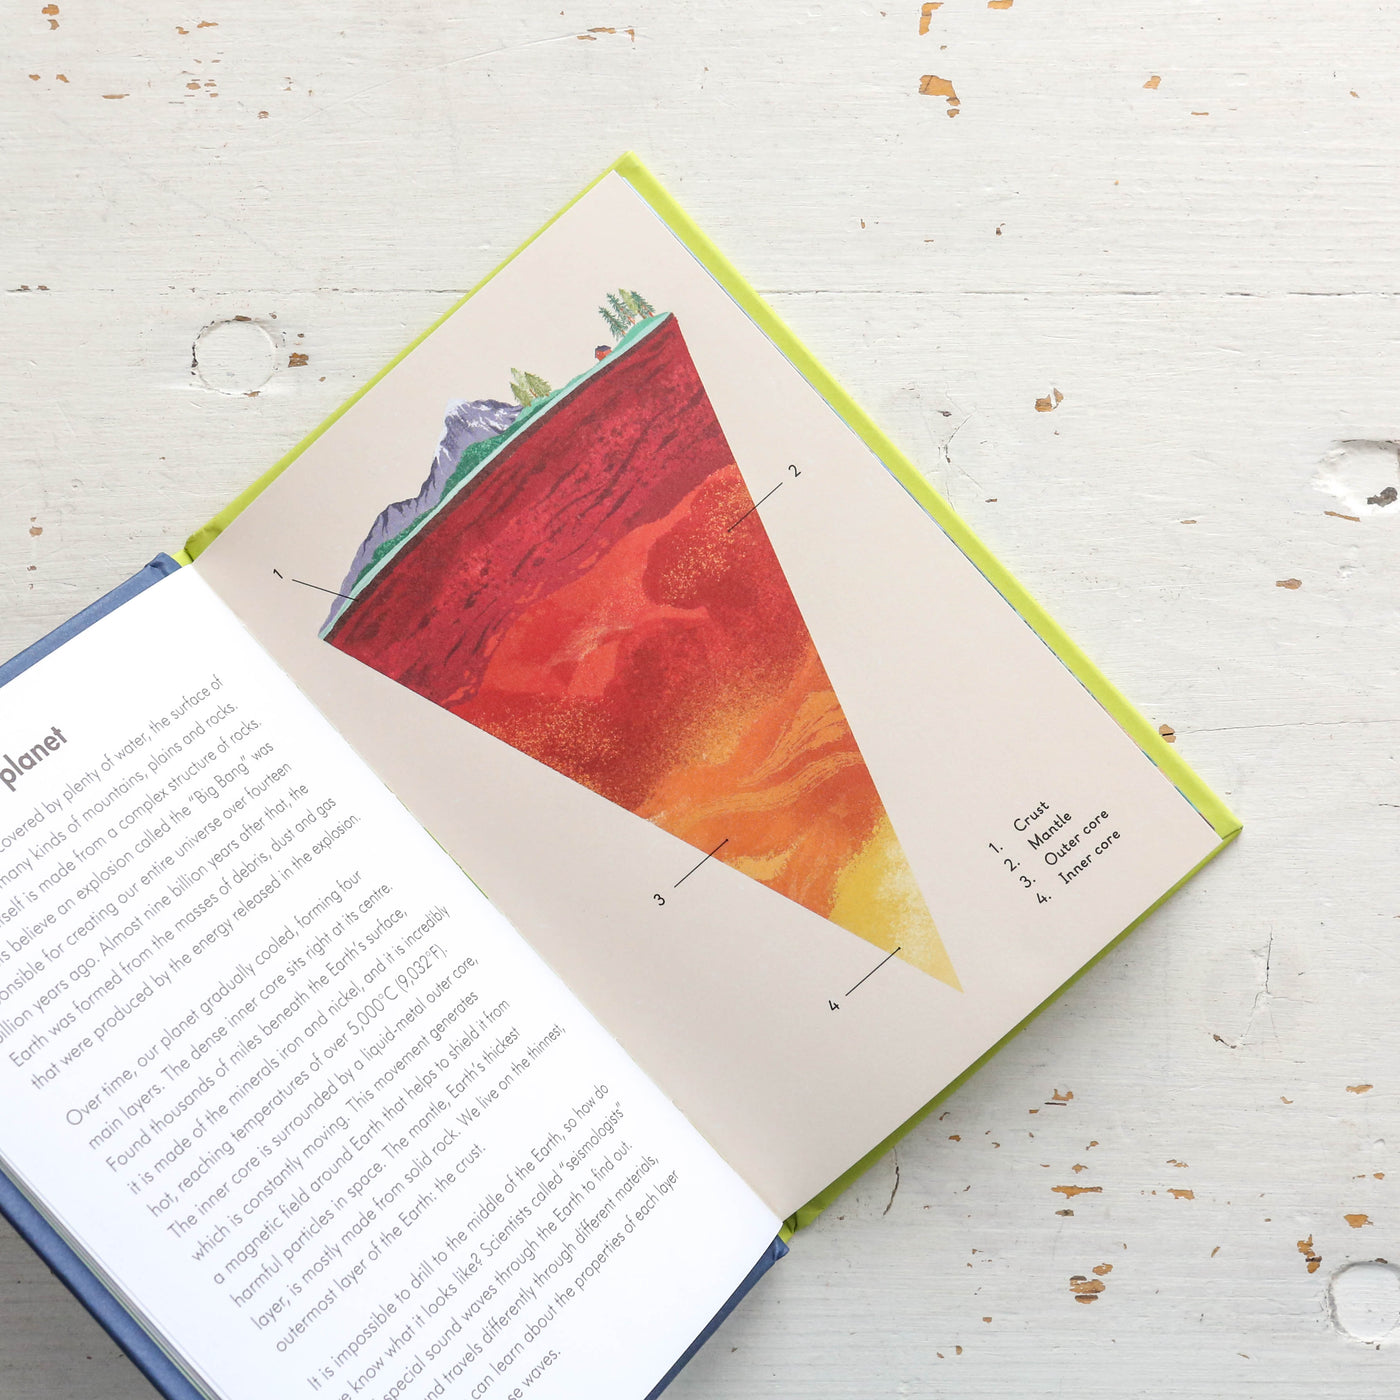 Planet Earth - A Ladybird Book